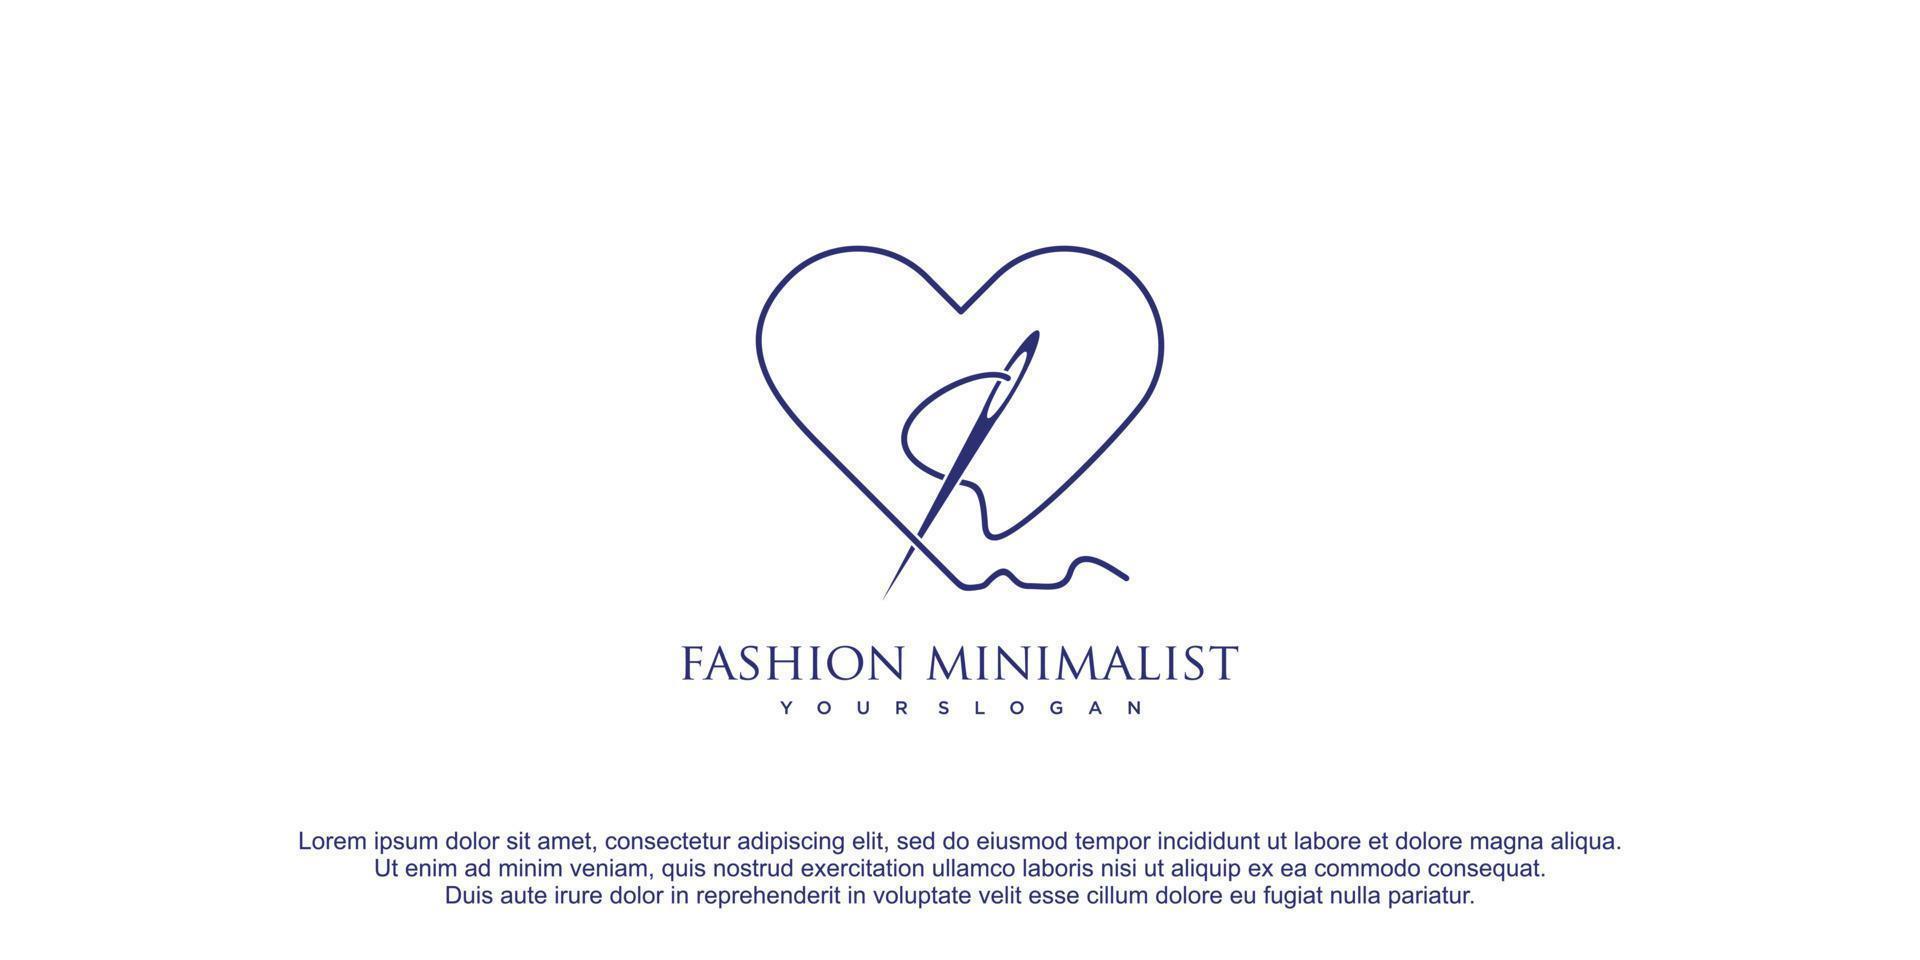 Minimalist simple taylor shop fashion logo with creative design premium vector